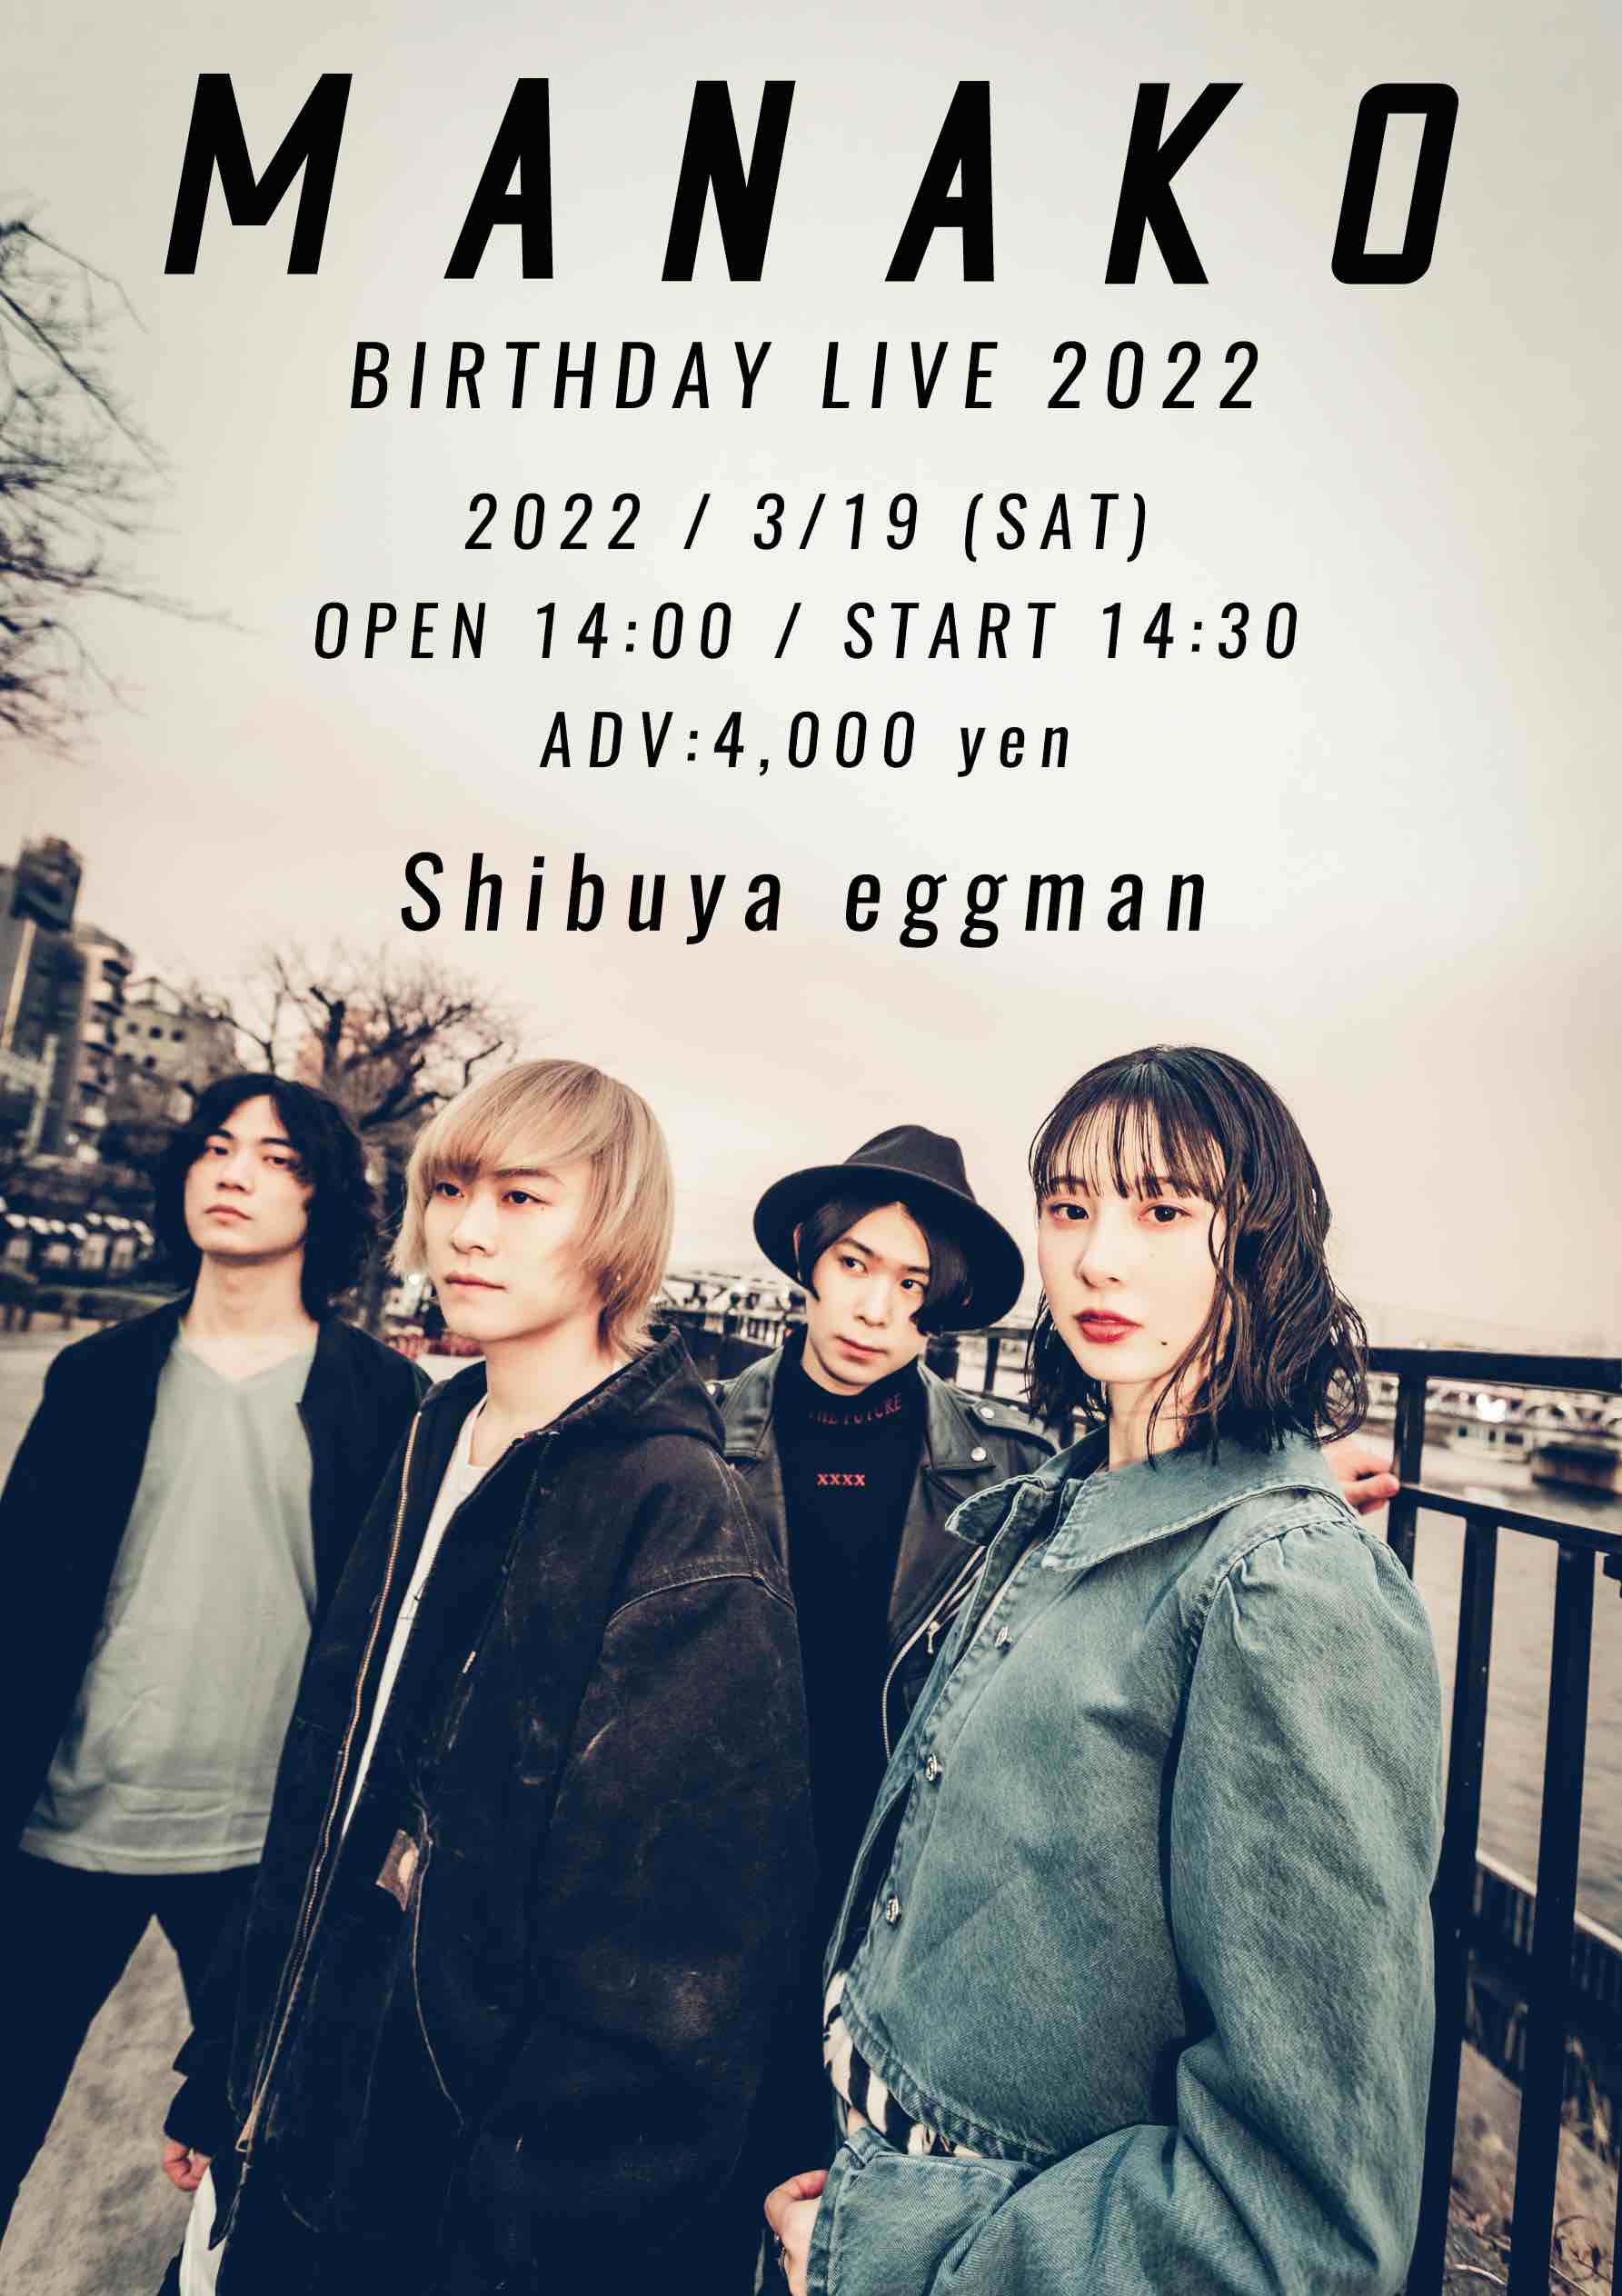 MANAKO BIRTHDAY LIVE 2022 !!